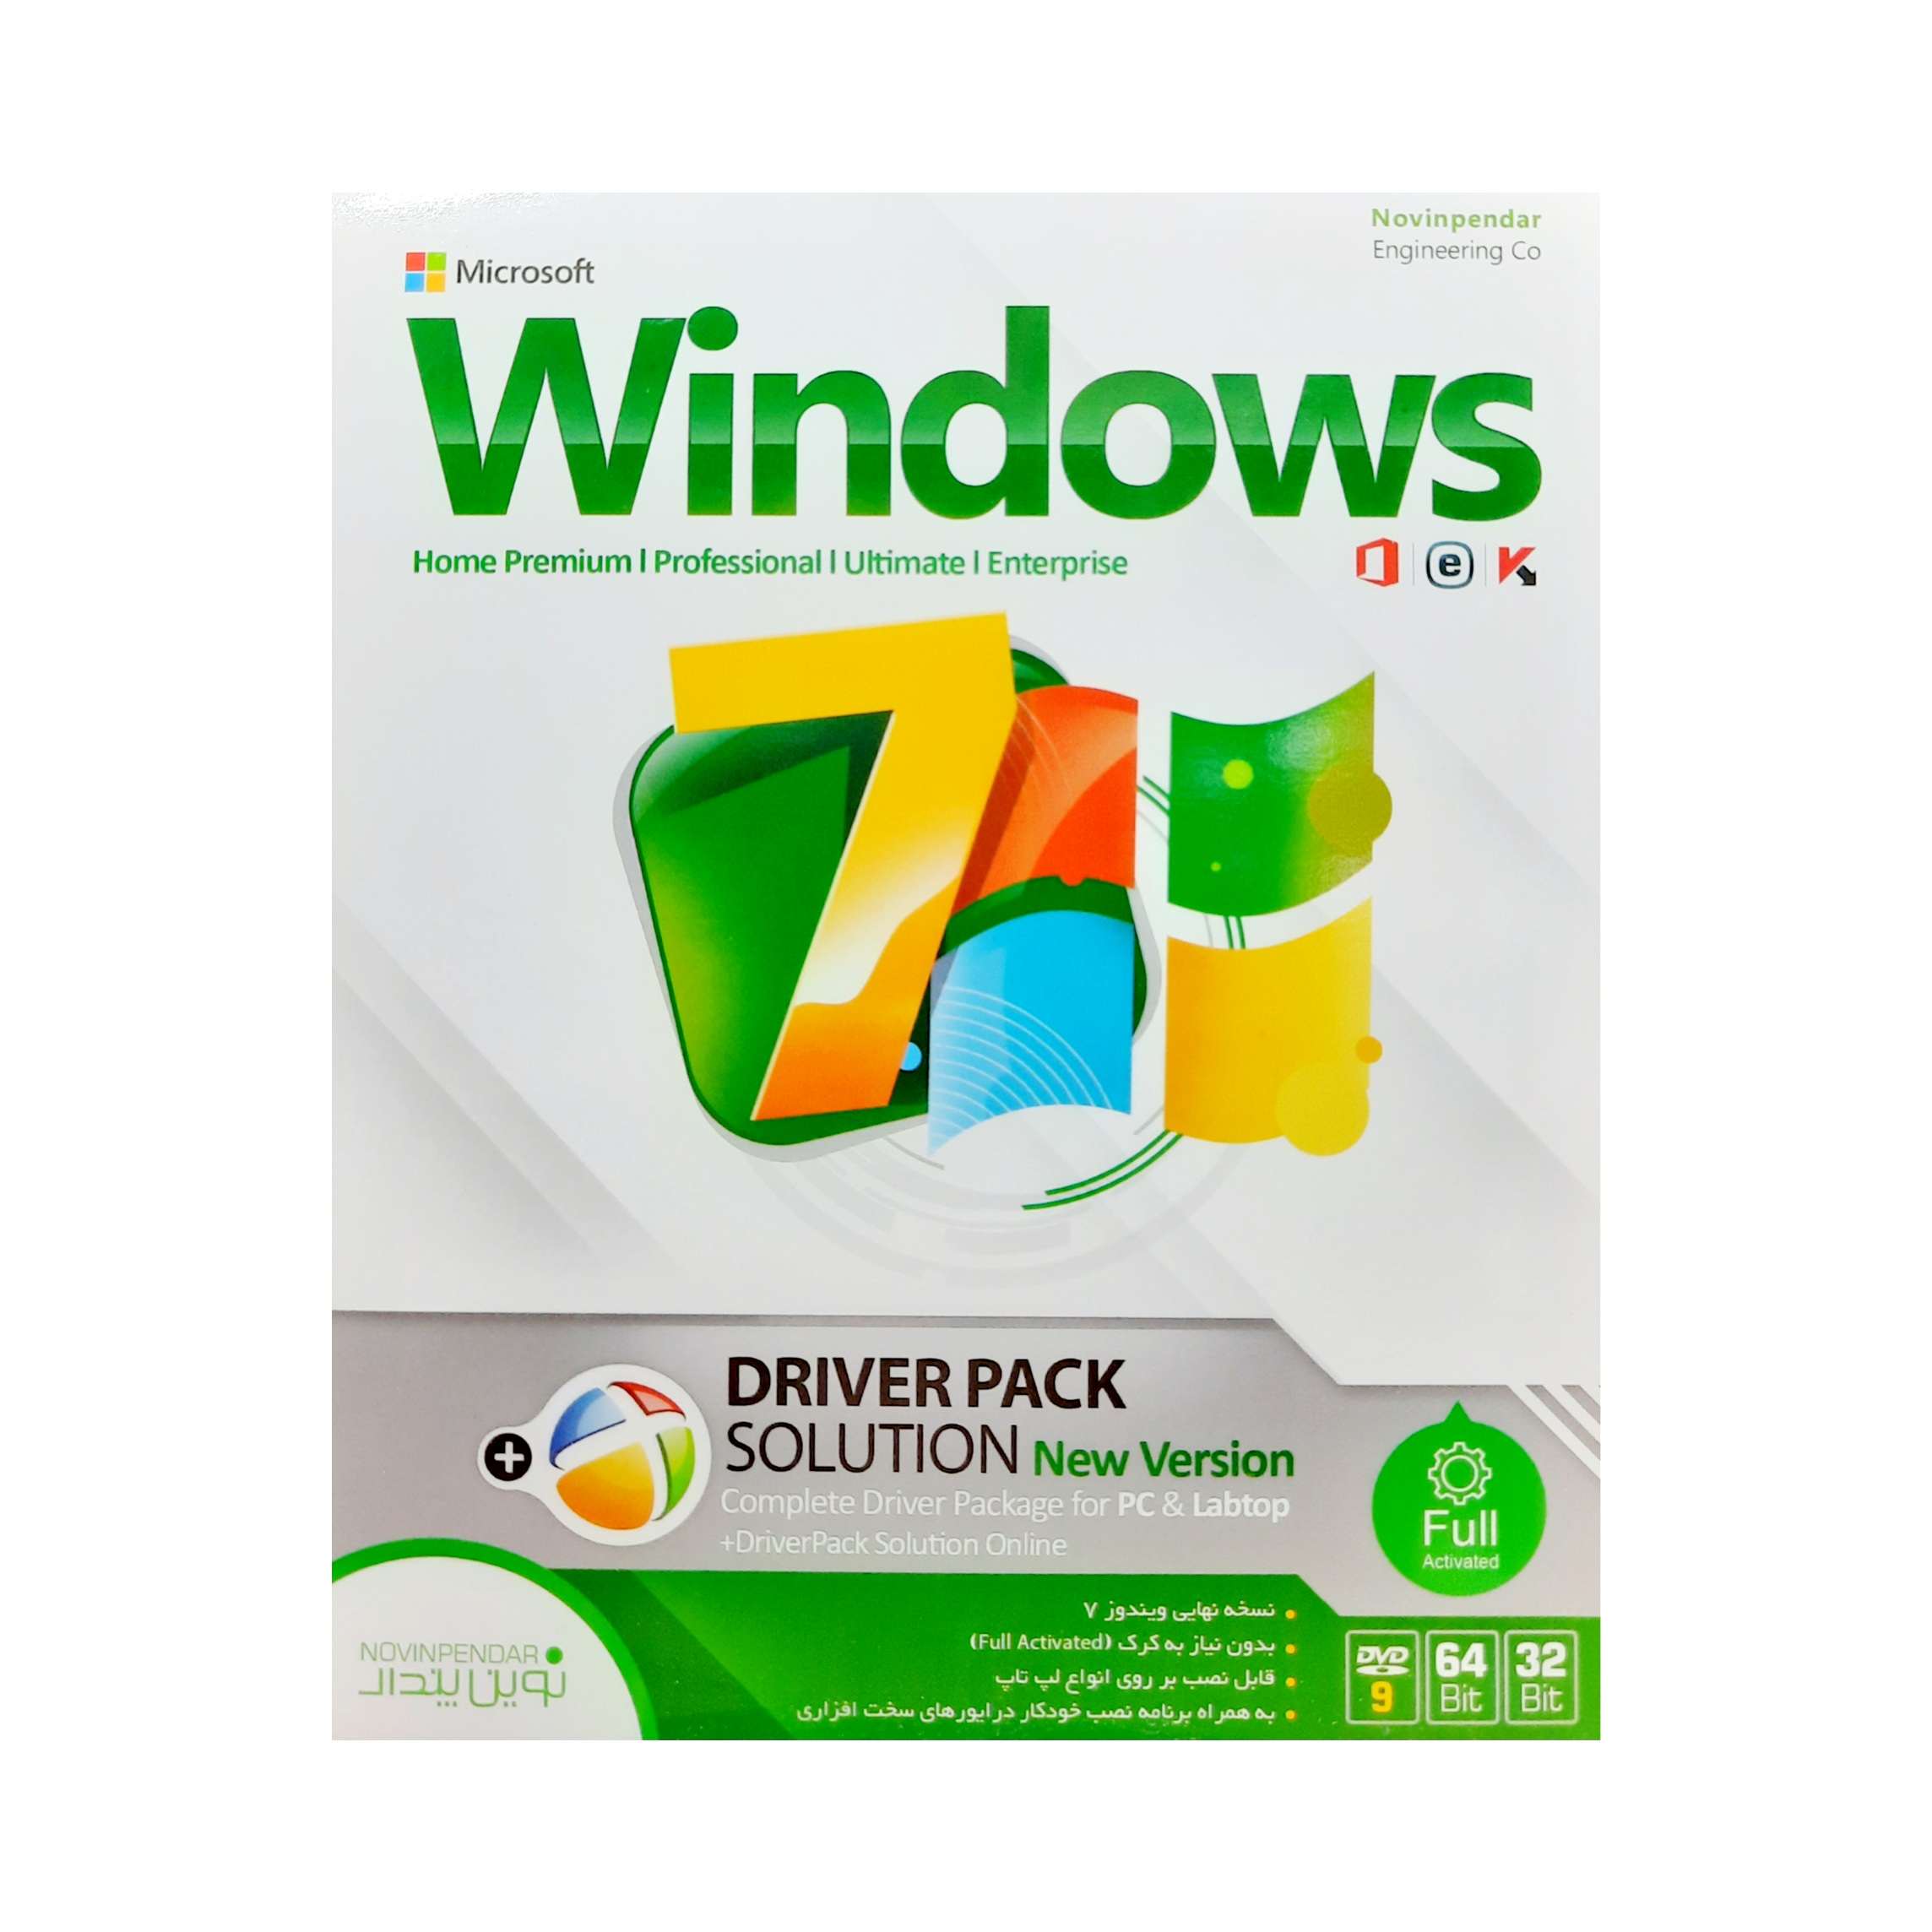 سیستم عامل Windows 7 + Driver Pack Solution new version نشر نوین پندار